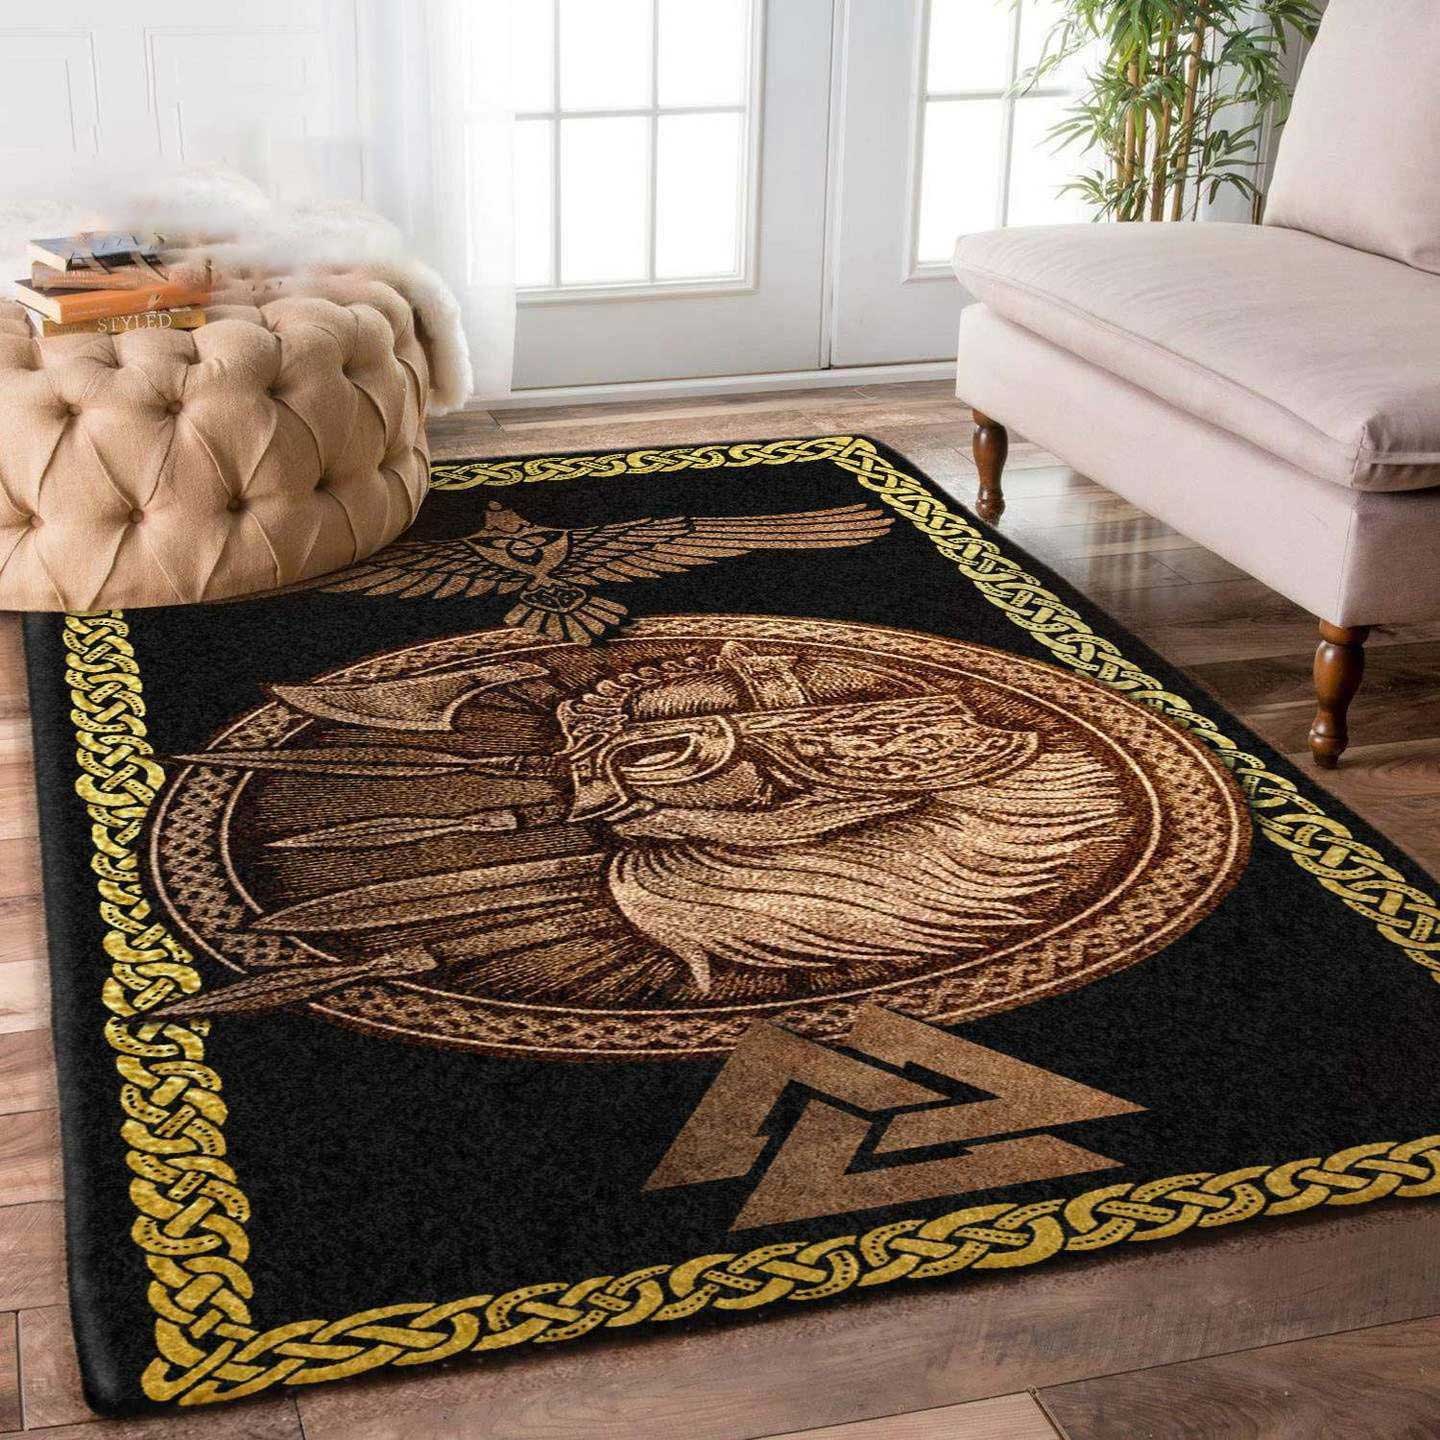 Viking rugs